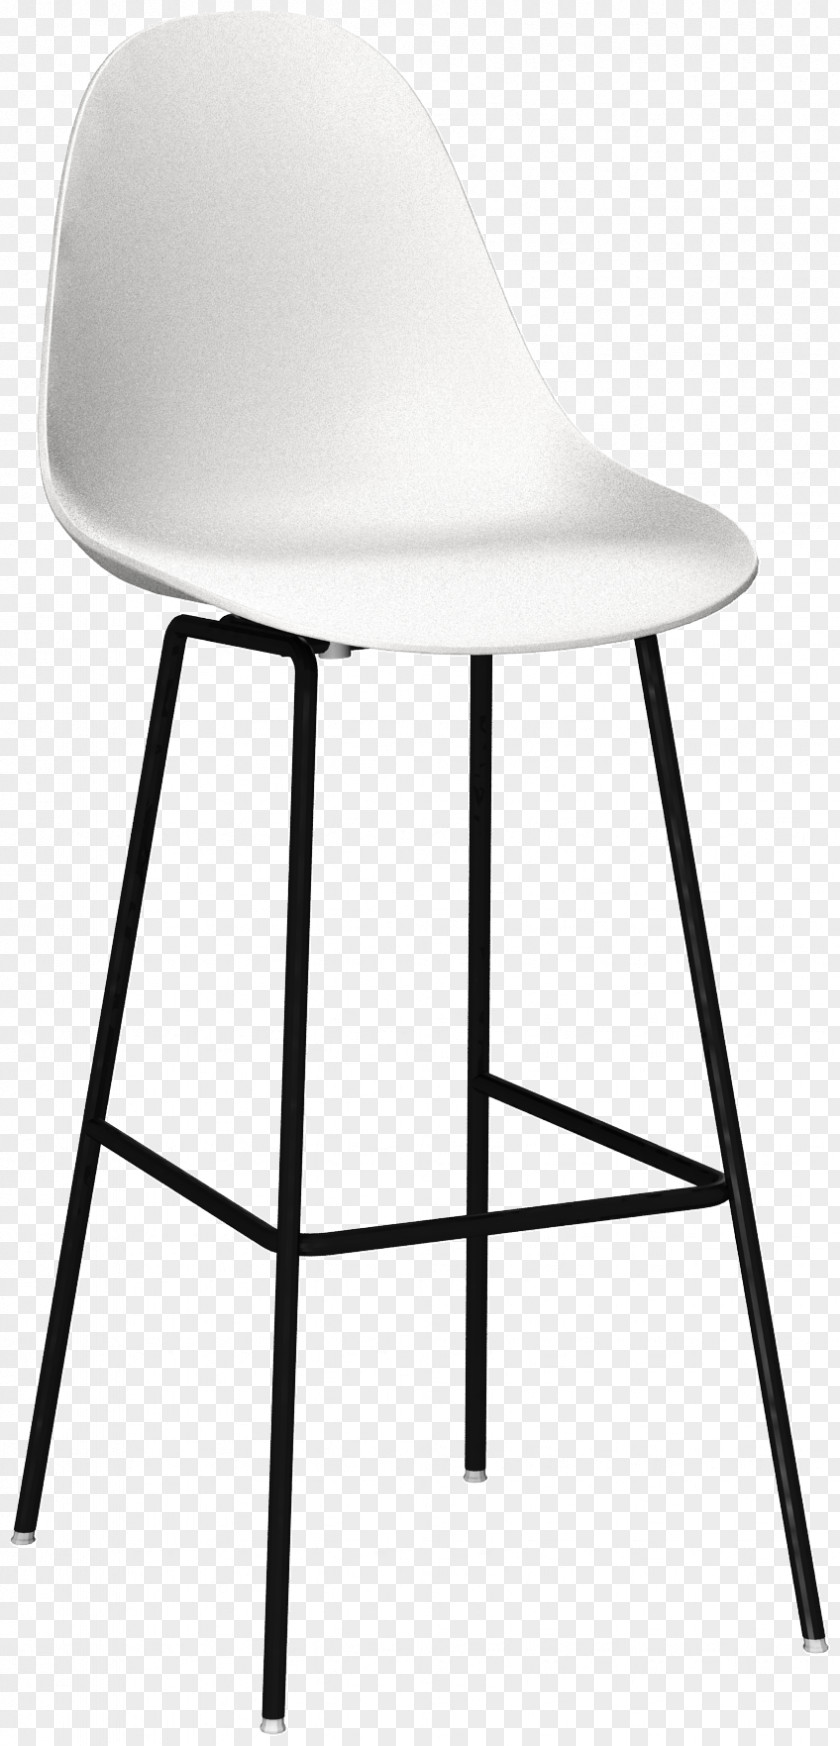 Chair Bar Stool Furniture Human Factors And Ergonomics PNG